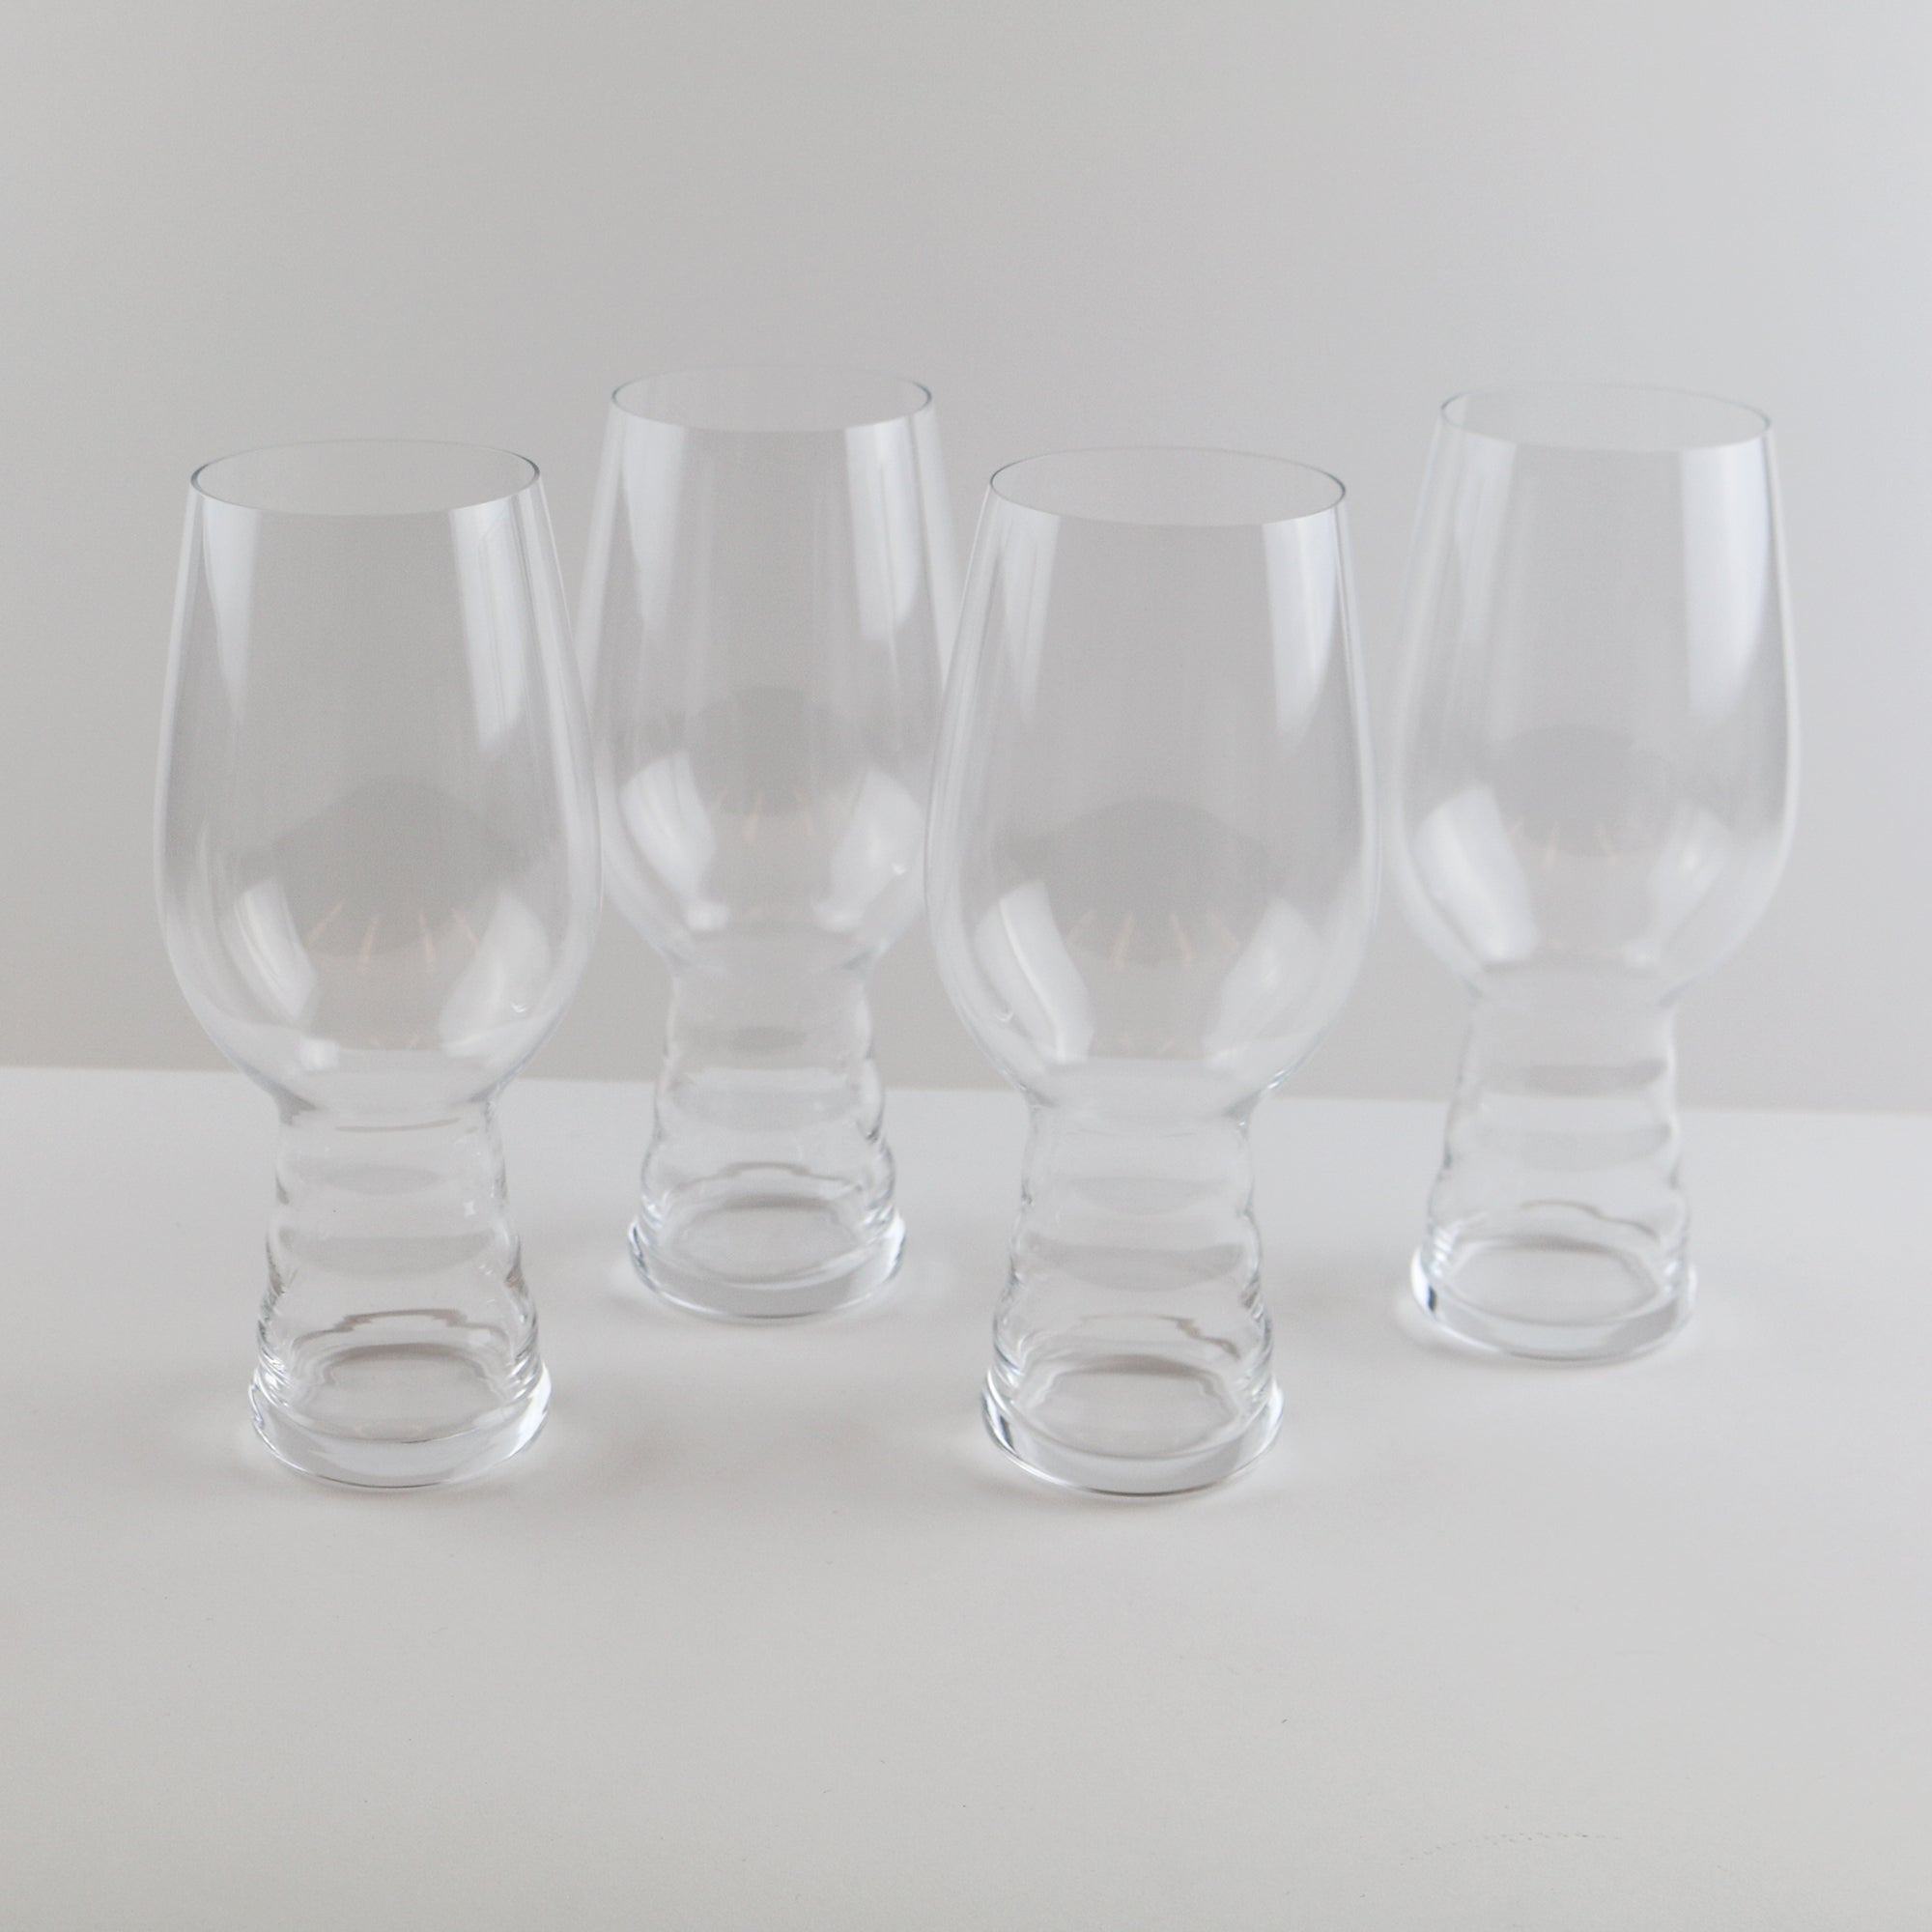 Spiegelau 19.1 oz IPA Glasses, Set of 6 - Drinkware